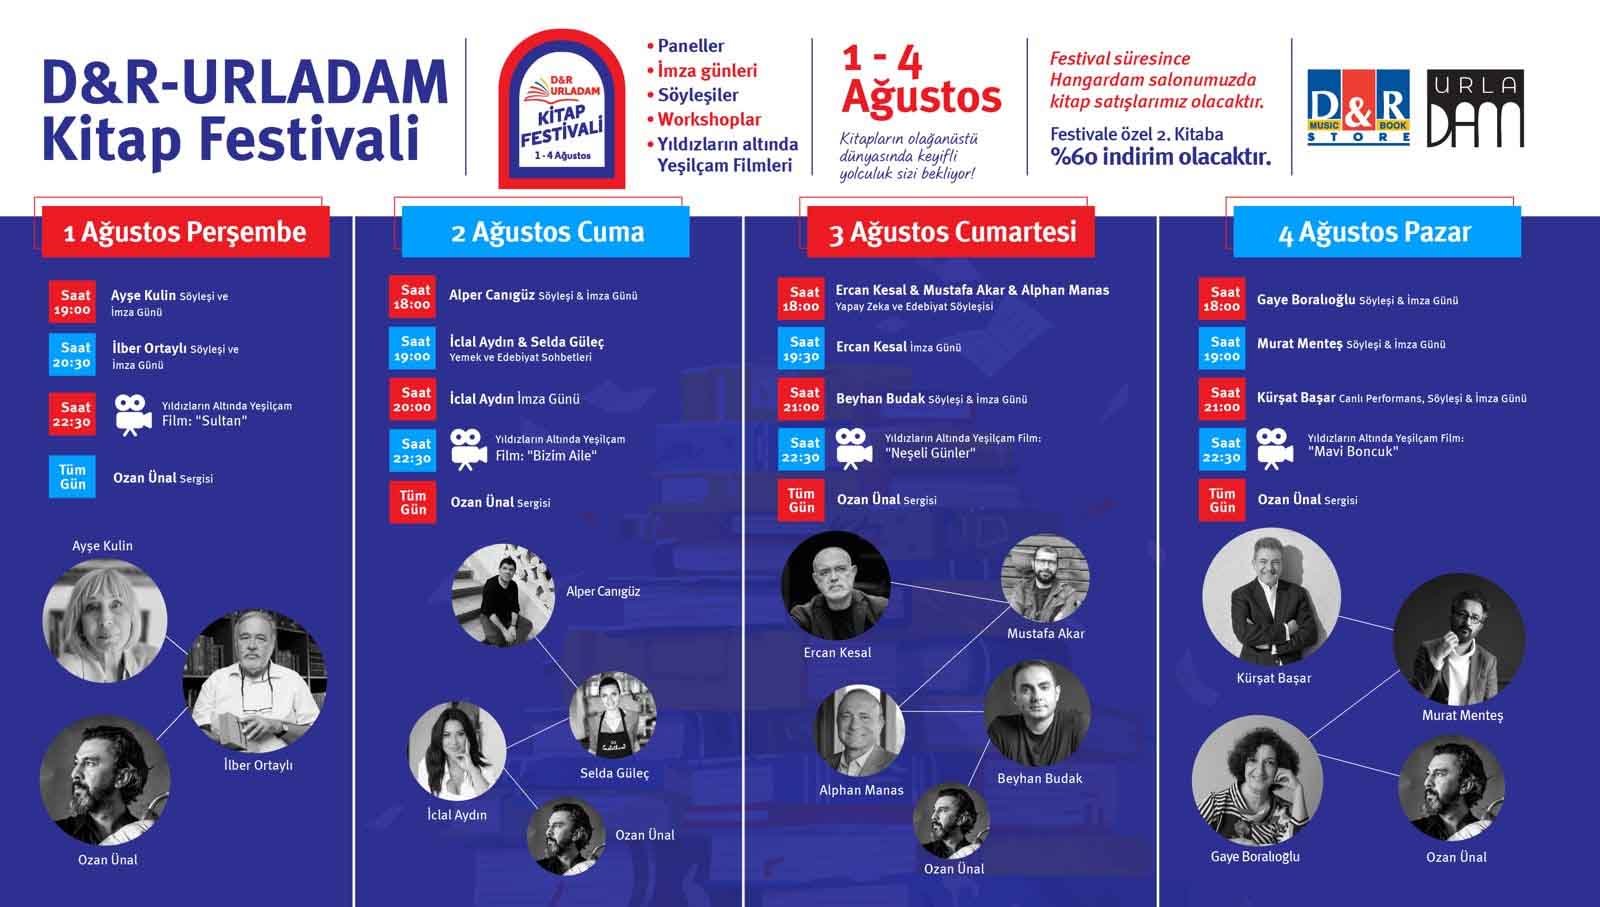 D&R Book Festival: Literature, Art, and Yeşilçam Films in Urladam